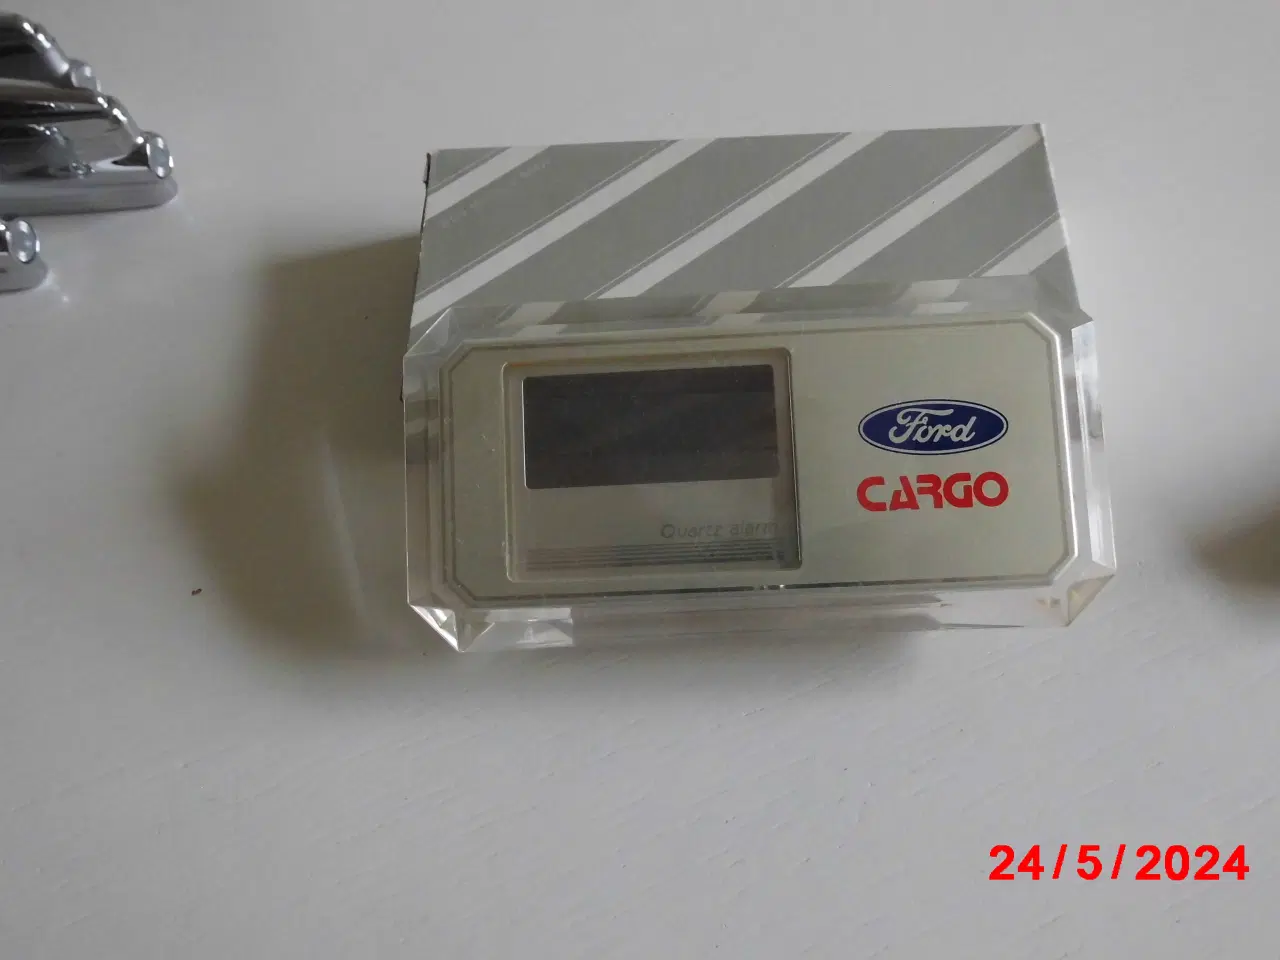 Billede 1 - Cargo Jewelry Alarm Clok